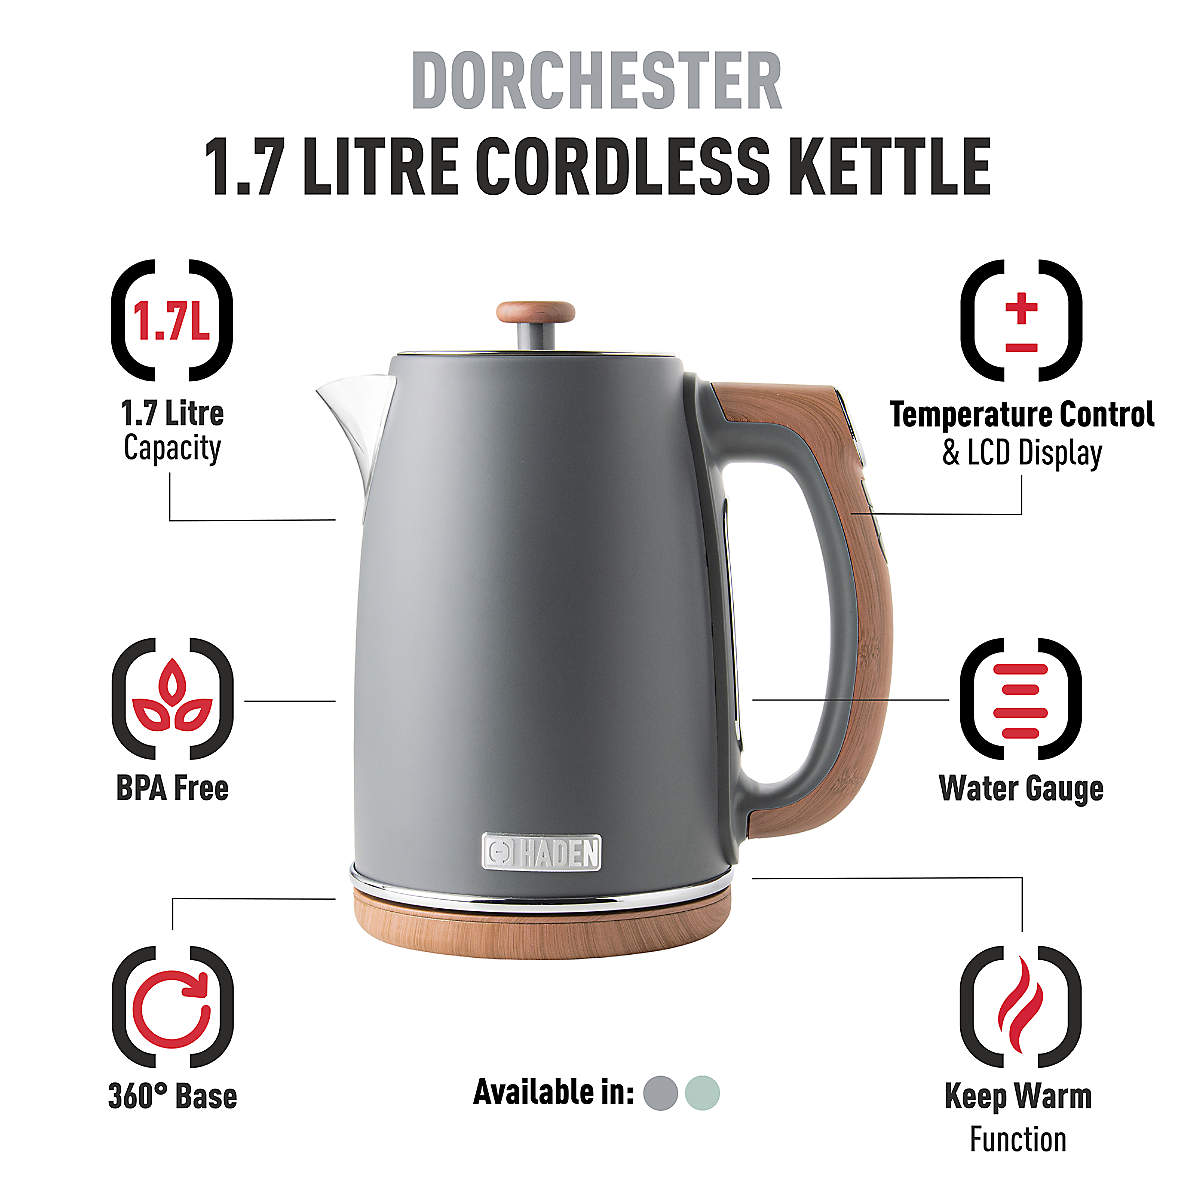 HADEN Dorchester Matte Black Electric Tea Kettle + Reviews, Crate & Barrel